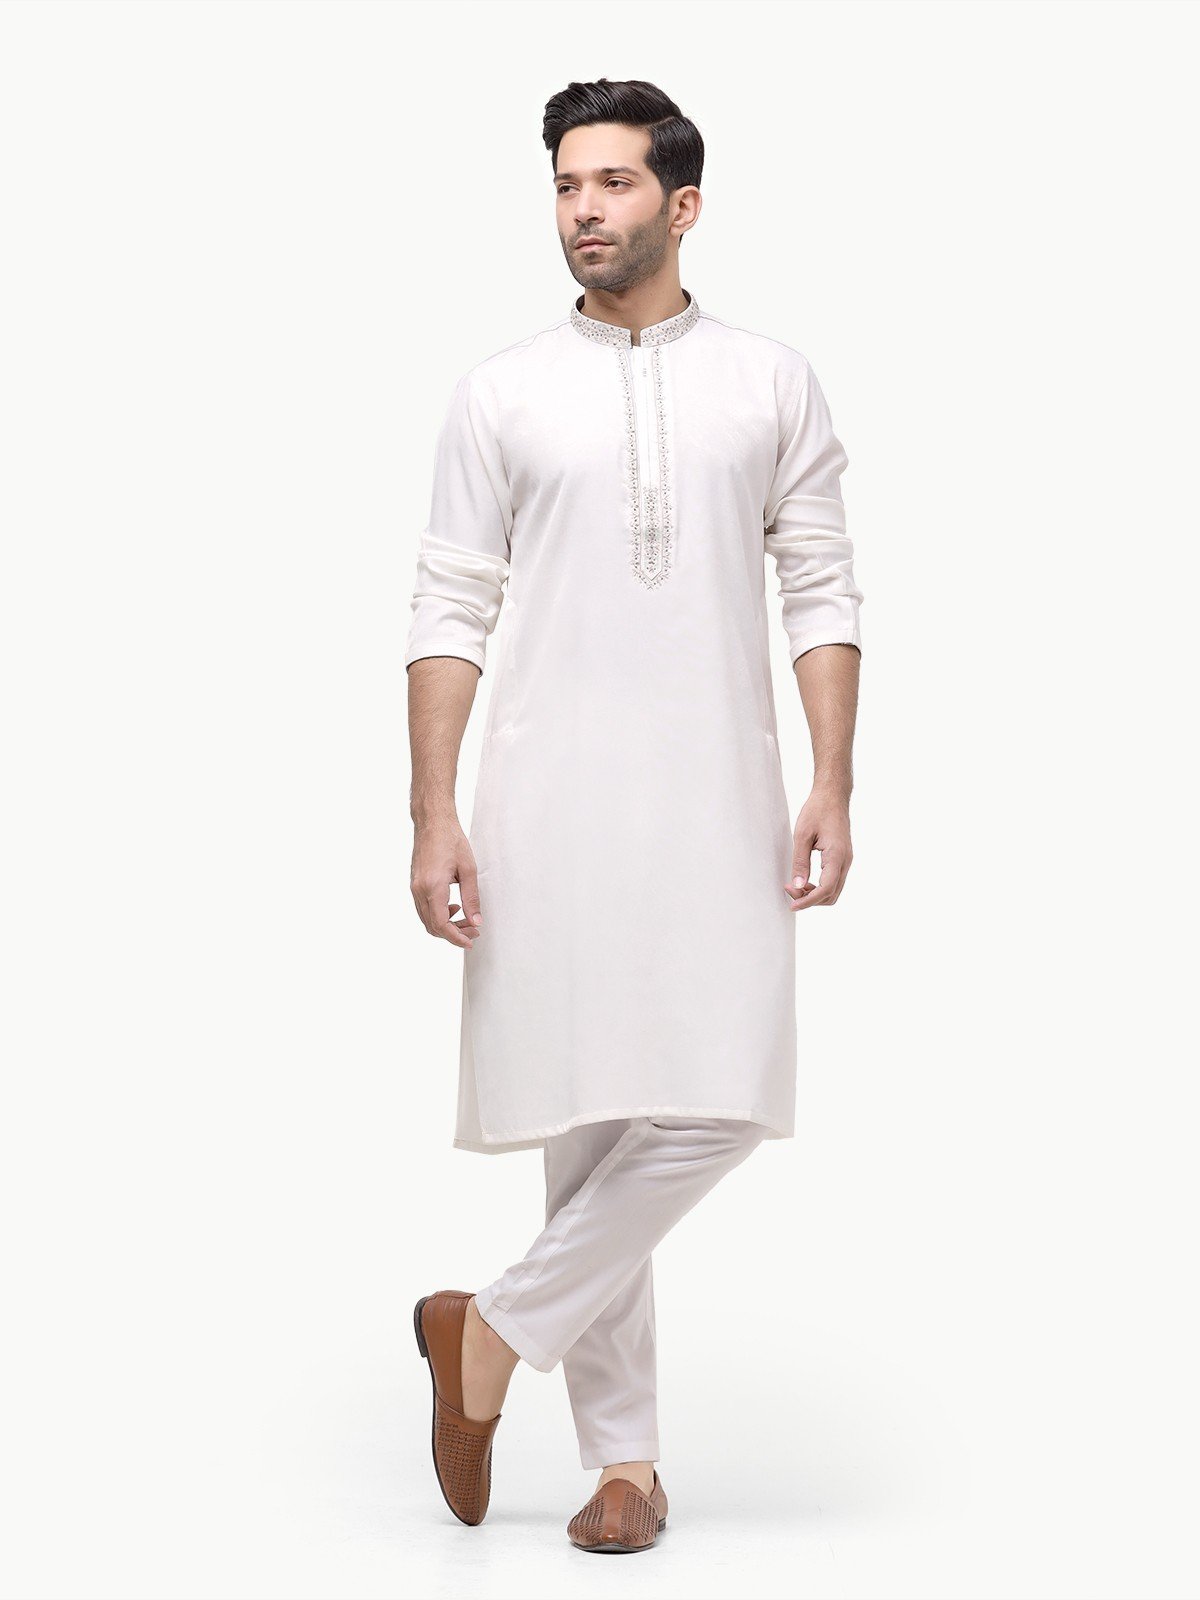 Top White Punjabi Suit Combination Designs -Styling Ideas for Plain White  Punjabi Suits - YouTube